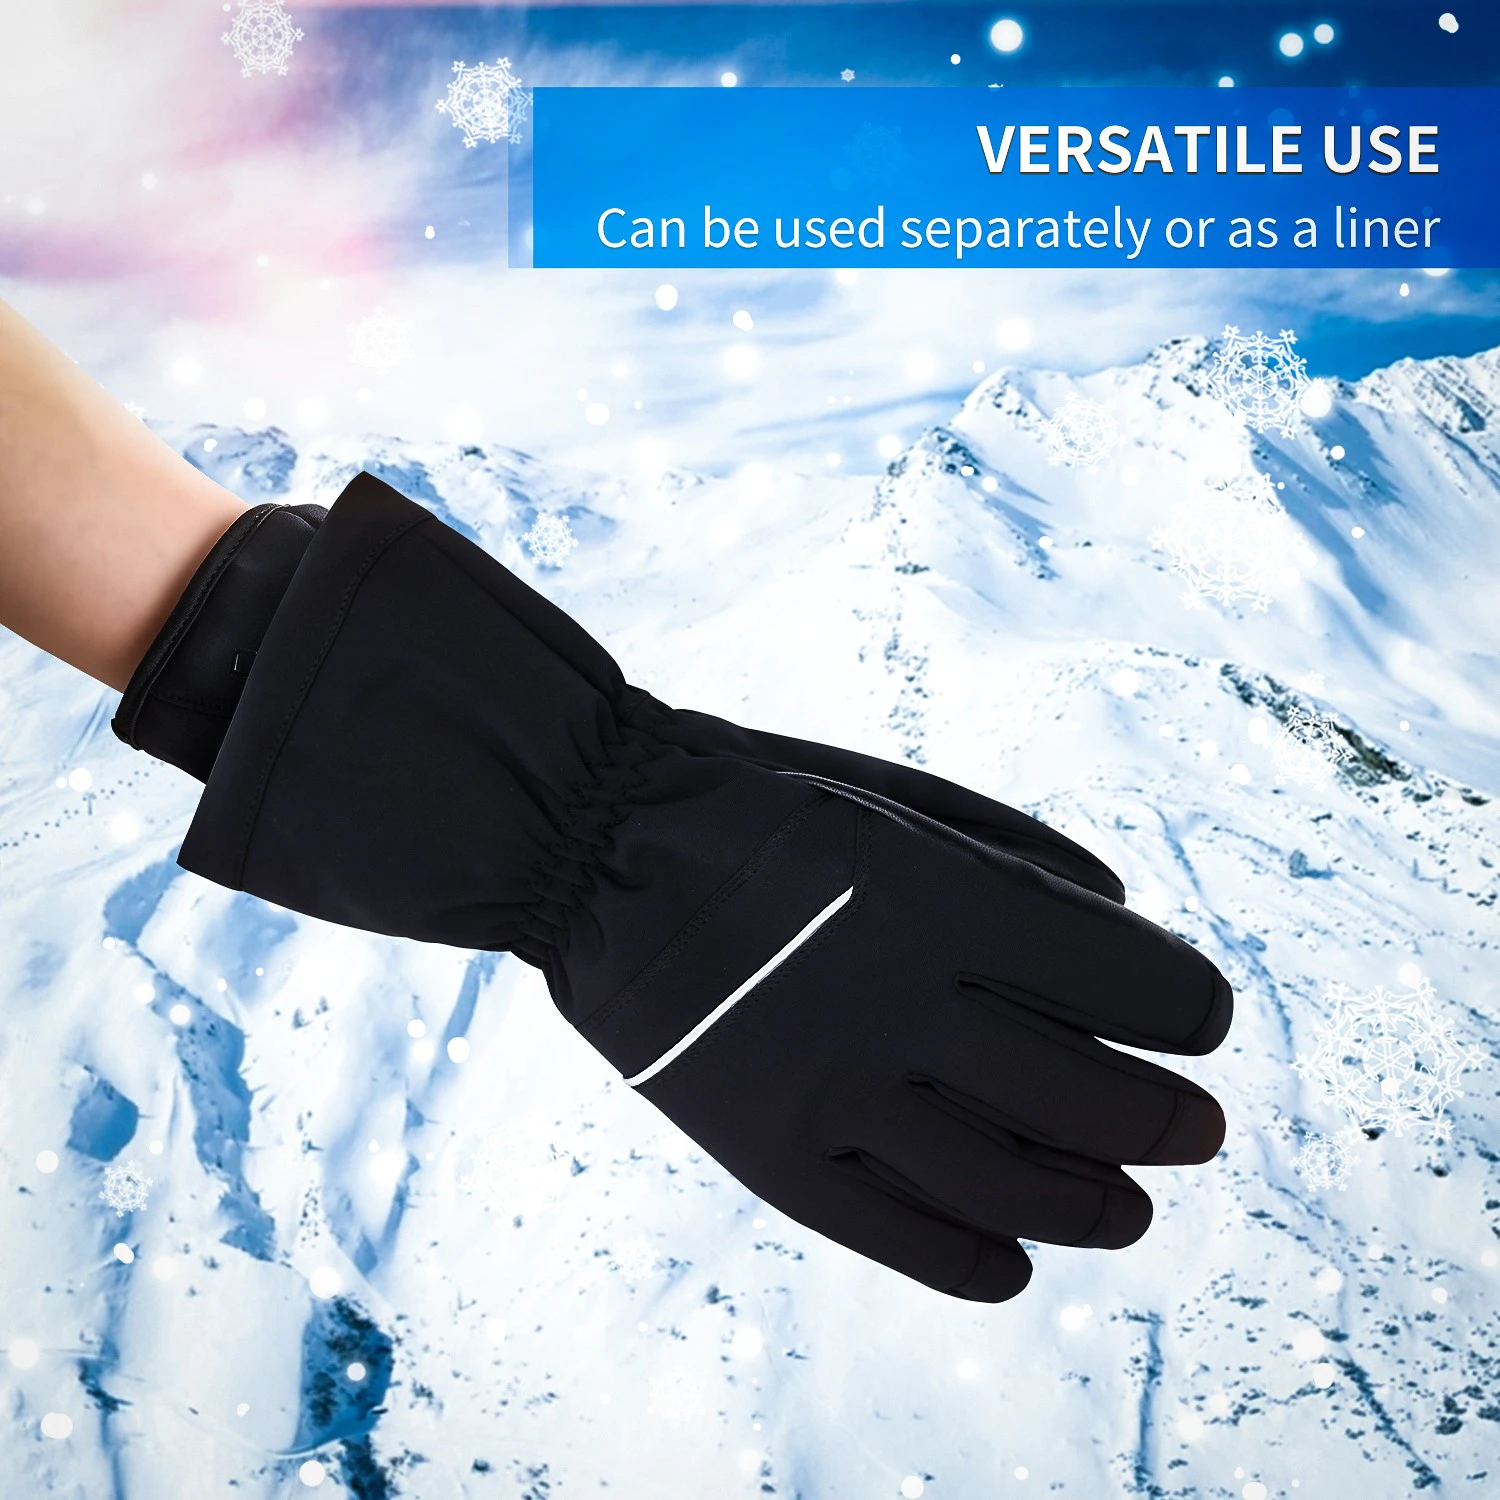 Dr. Warm heat insulated gloves